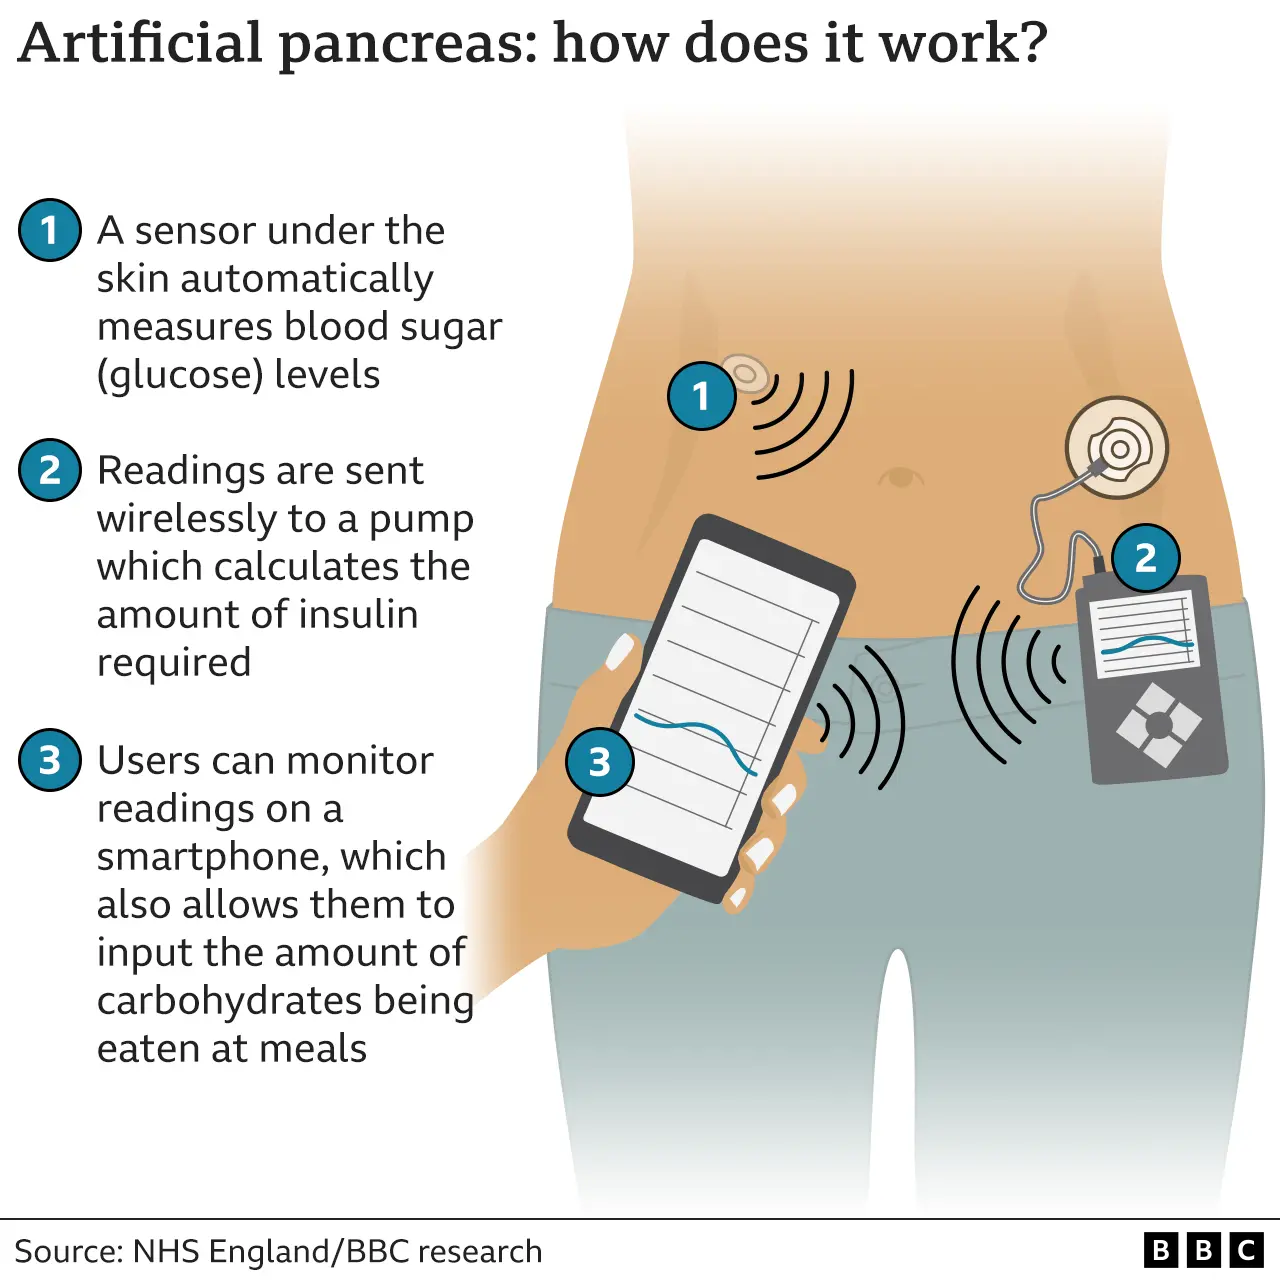 Artificial pancreas technology